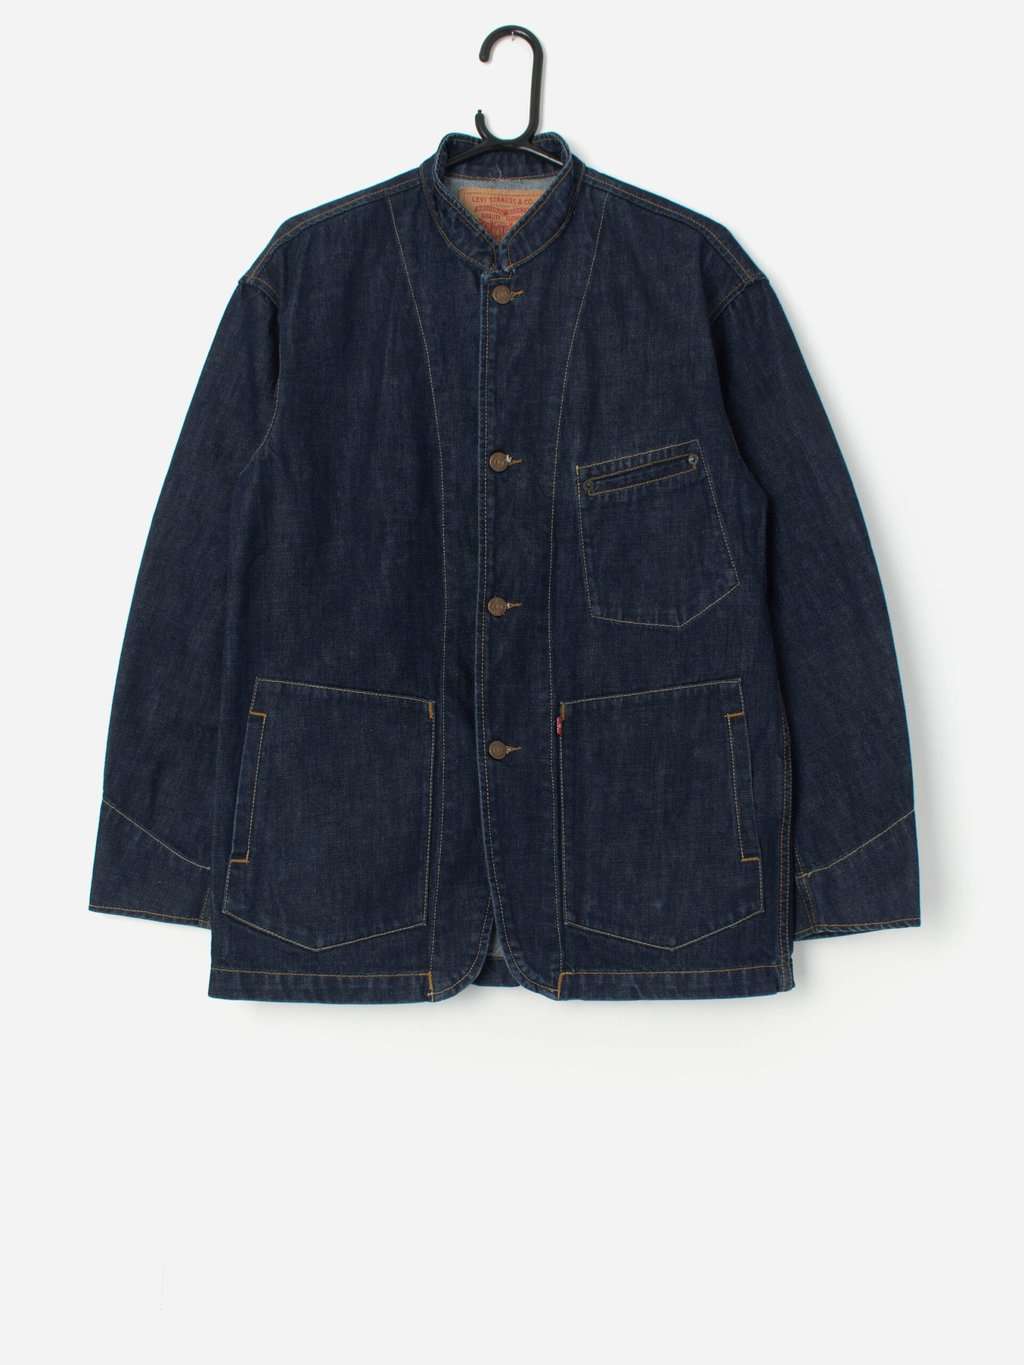 Rare Levis 70515 denim railroad / chore / engineer jacket - Small ...